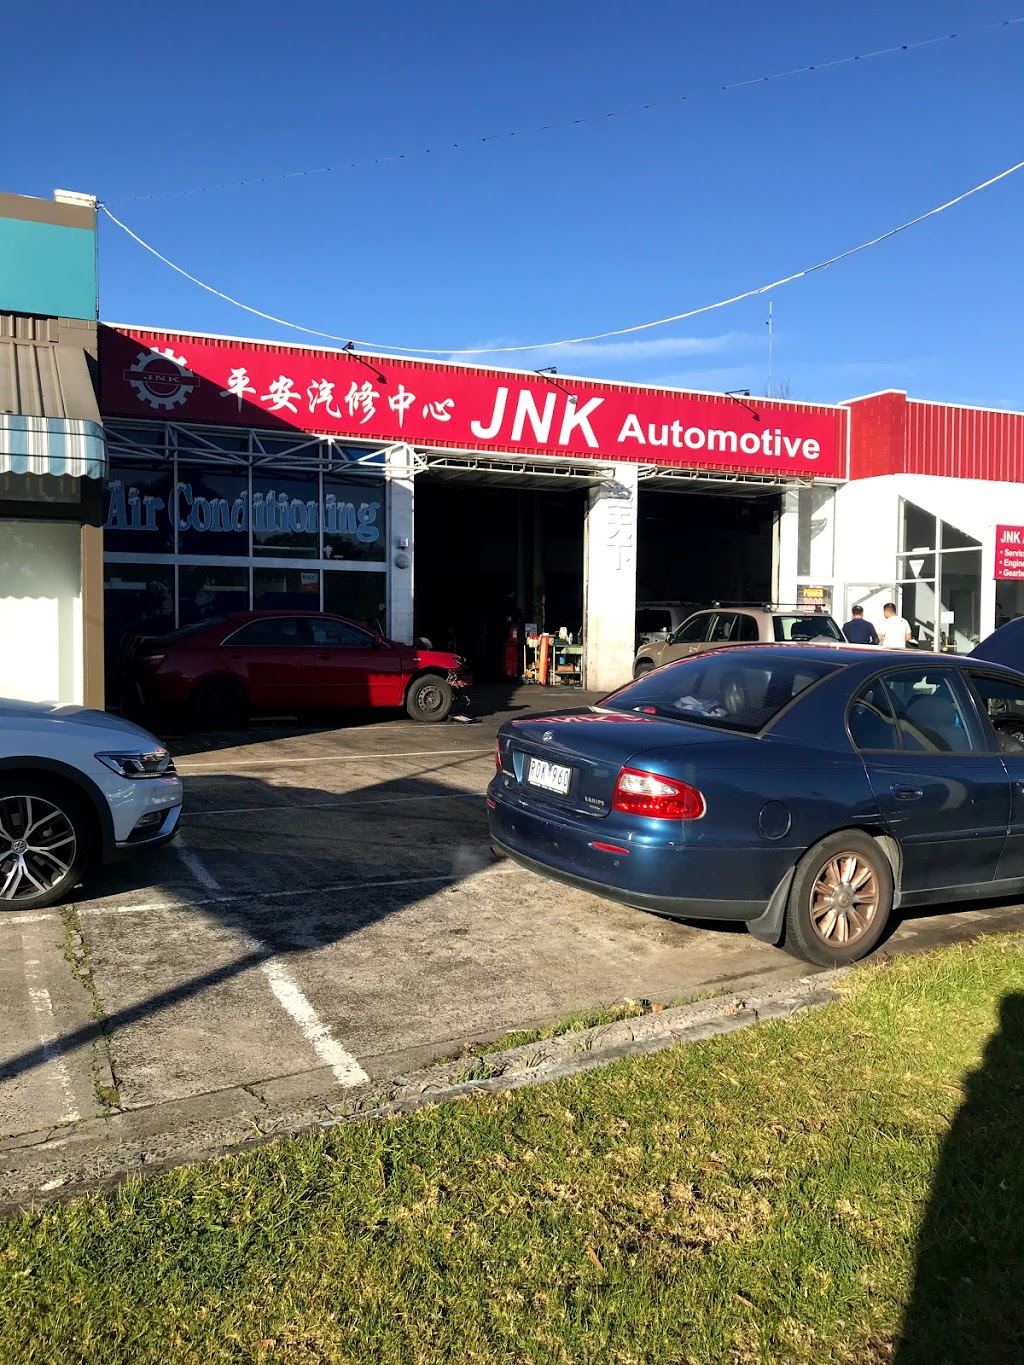 JNK Whitehorse Automotive | car repair | 446 Whitehorse Rd, Mitcham VIC 3132, Australia | 0398732622 OR +61 3 9873 2622